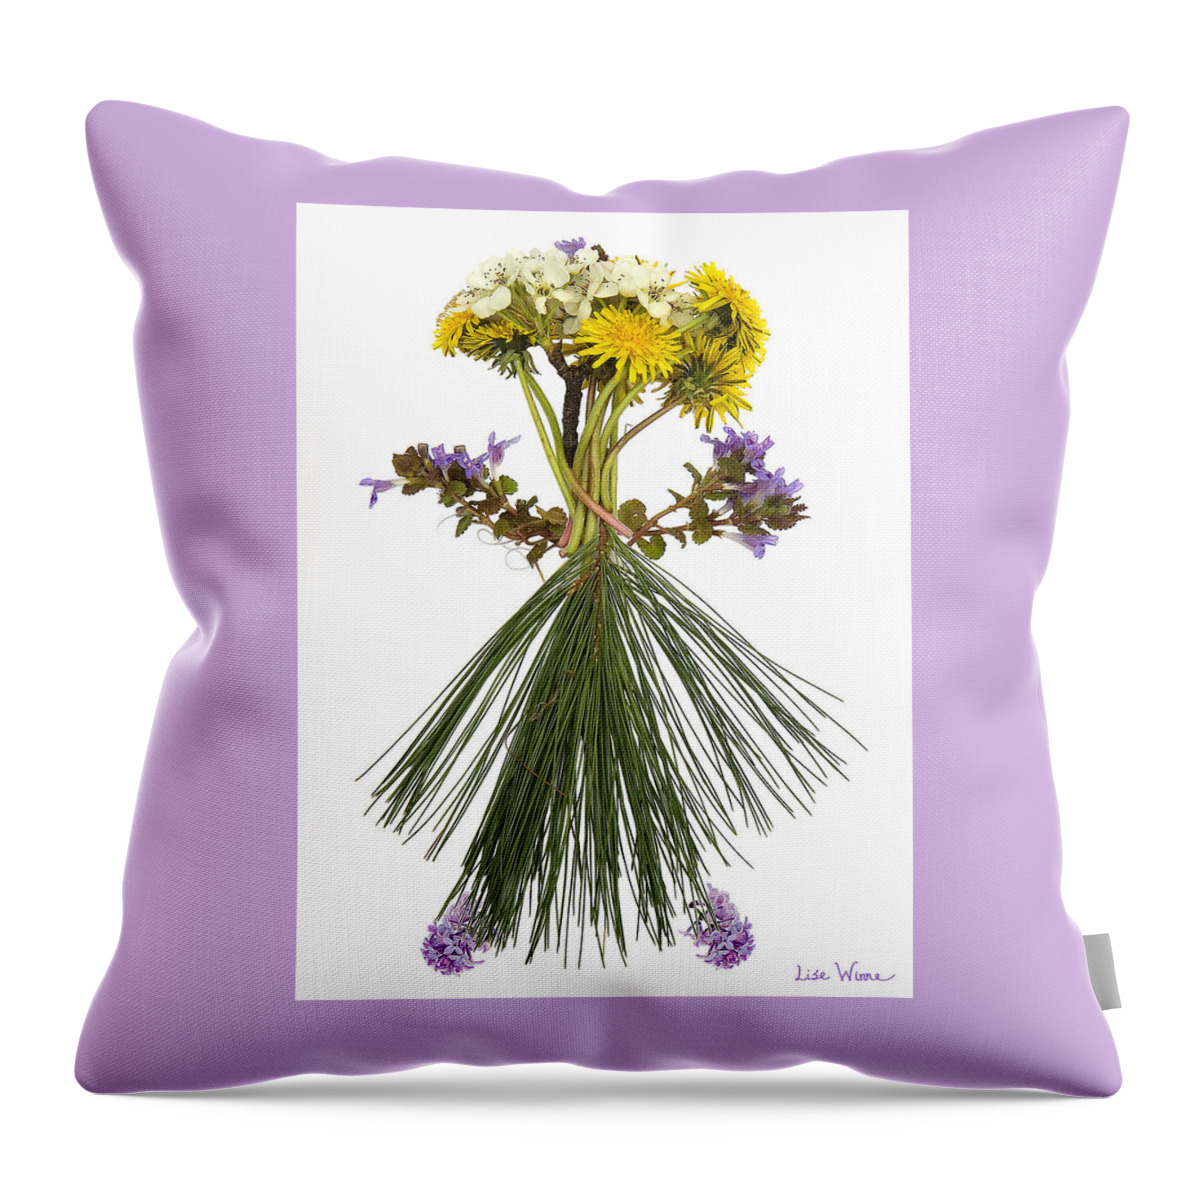 Flower Person Throw Pillow featuring the digital art Flower Head by Lise Winne